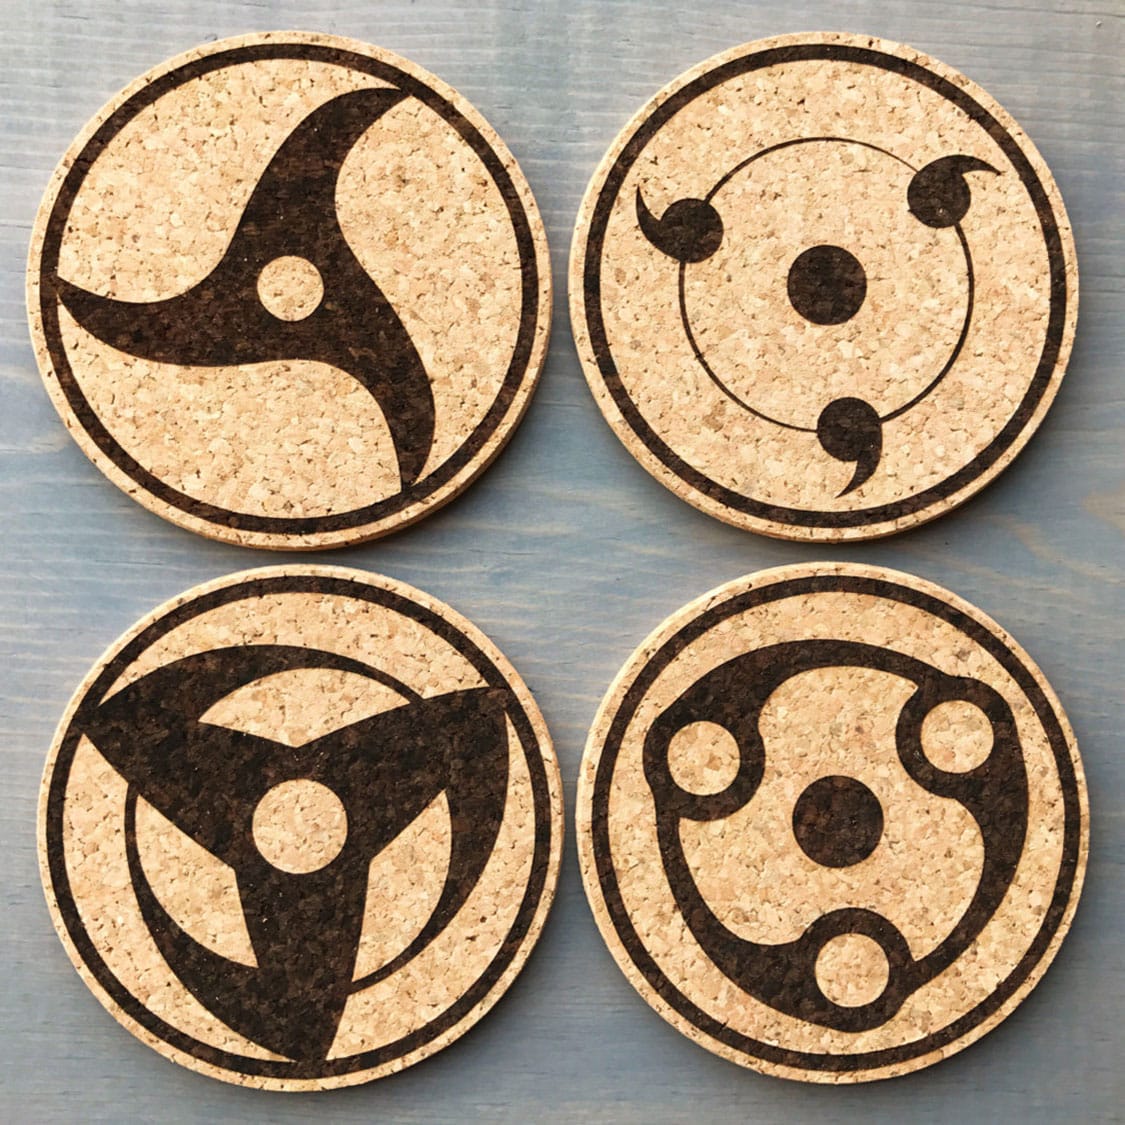 Naruto Coasters